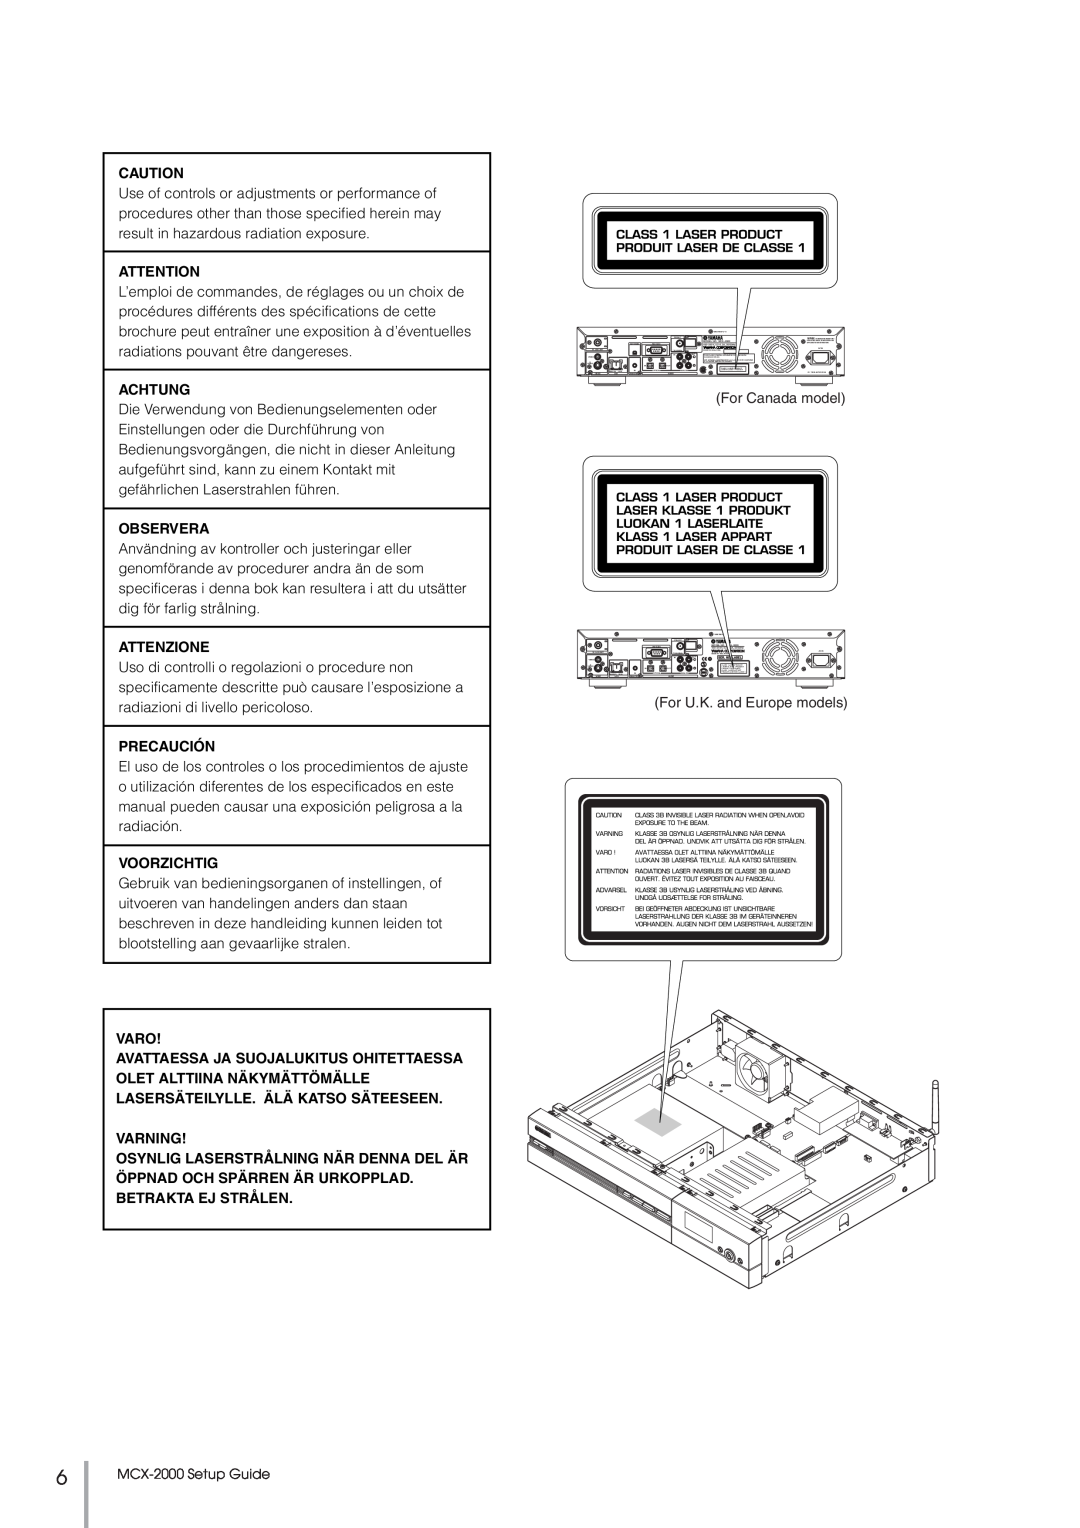 Yamaha MCX-2000 setup guide Achtung, Observera, Attenzione, Precaución, Voorzichtig, Varo, Varning 